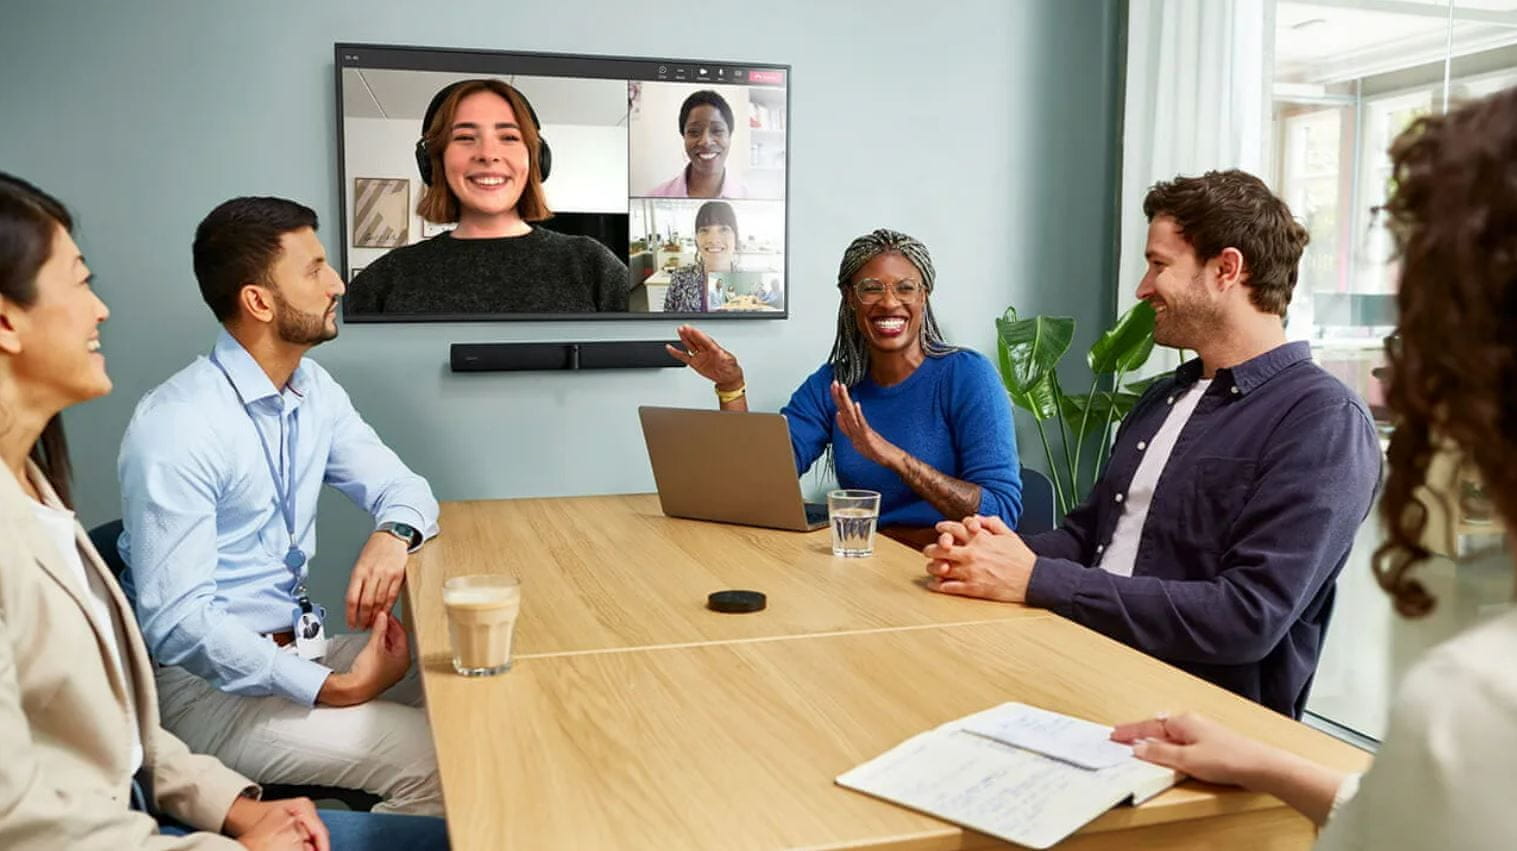 Visoka kakovost opravljanja video konferenc